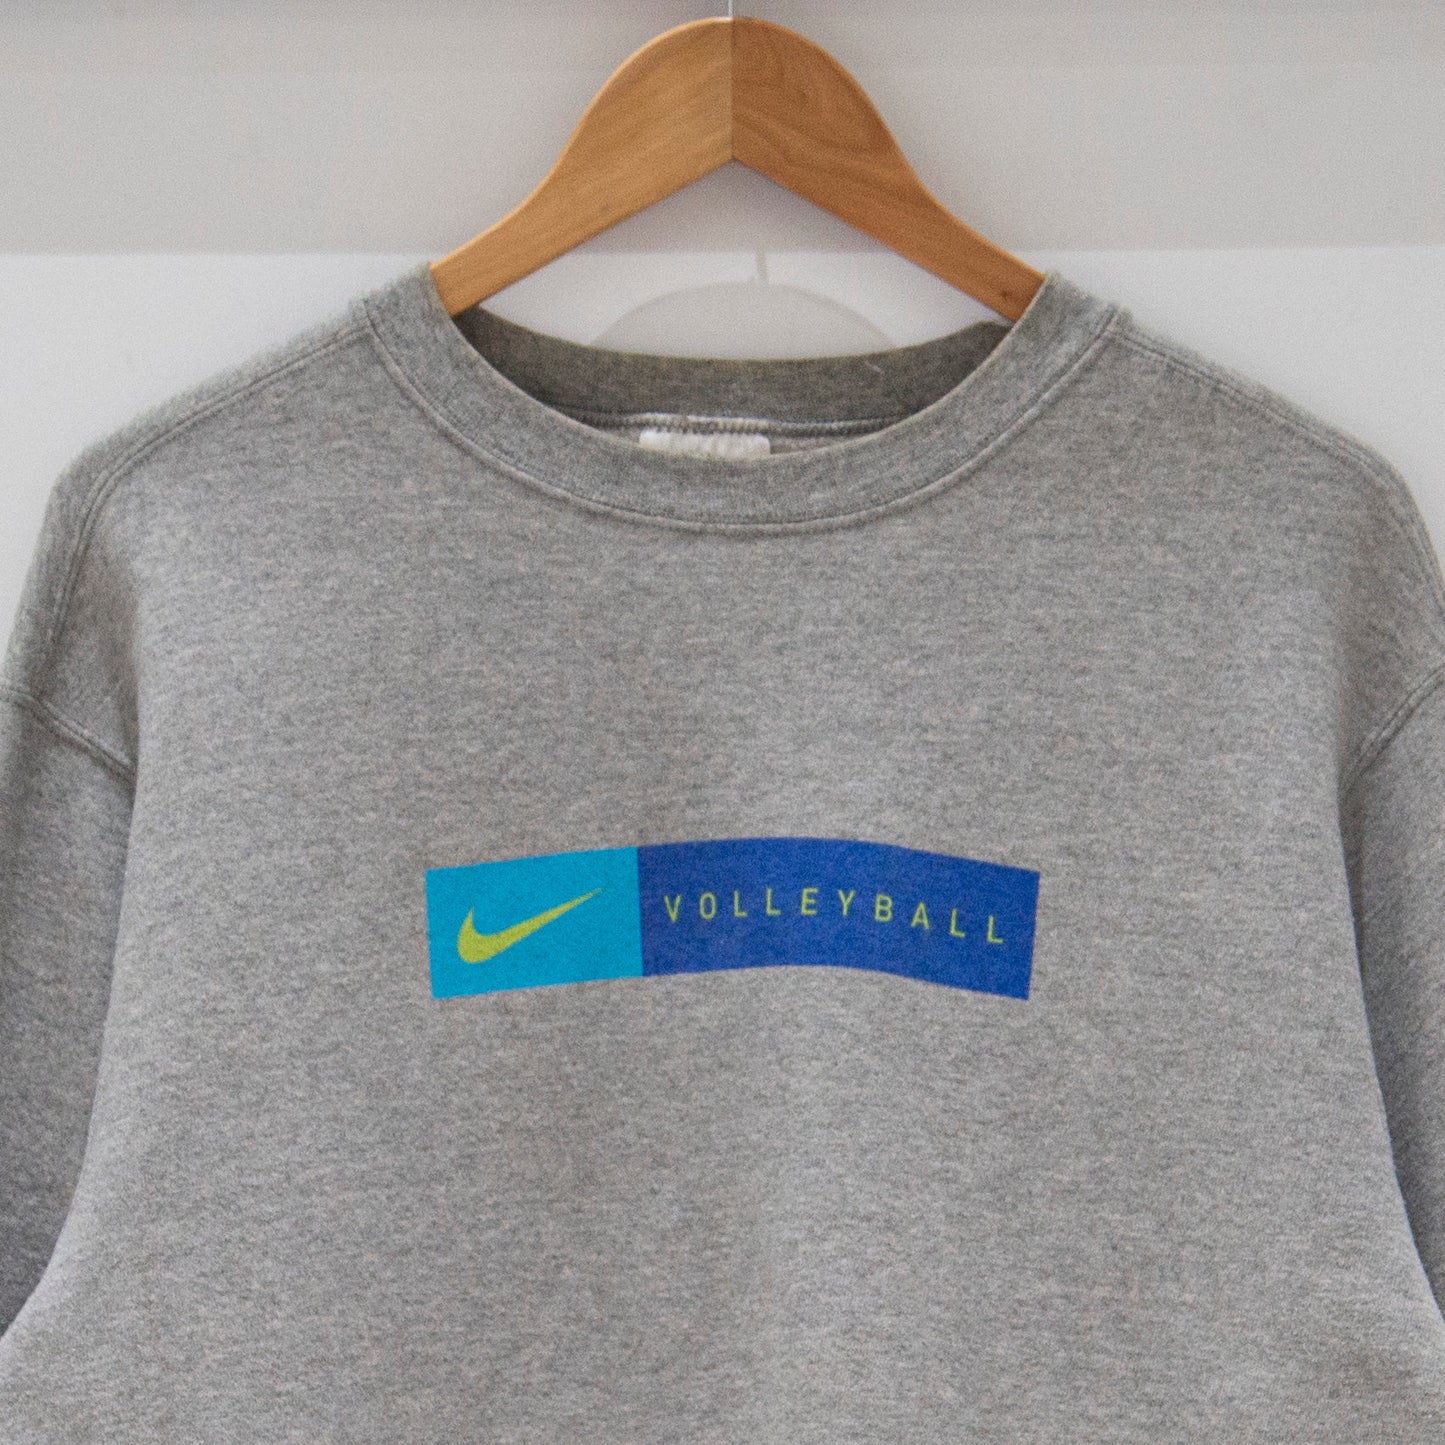 Vintage 90's Nike Volleyball Sweatshirt Medium